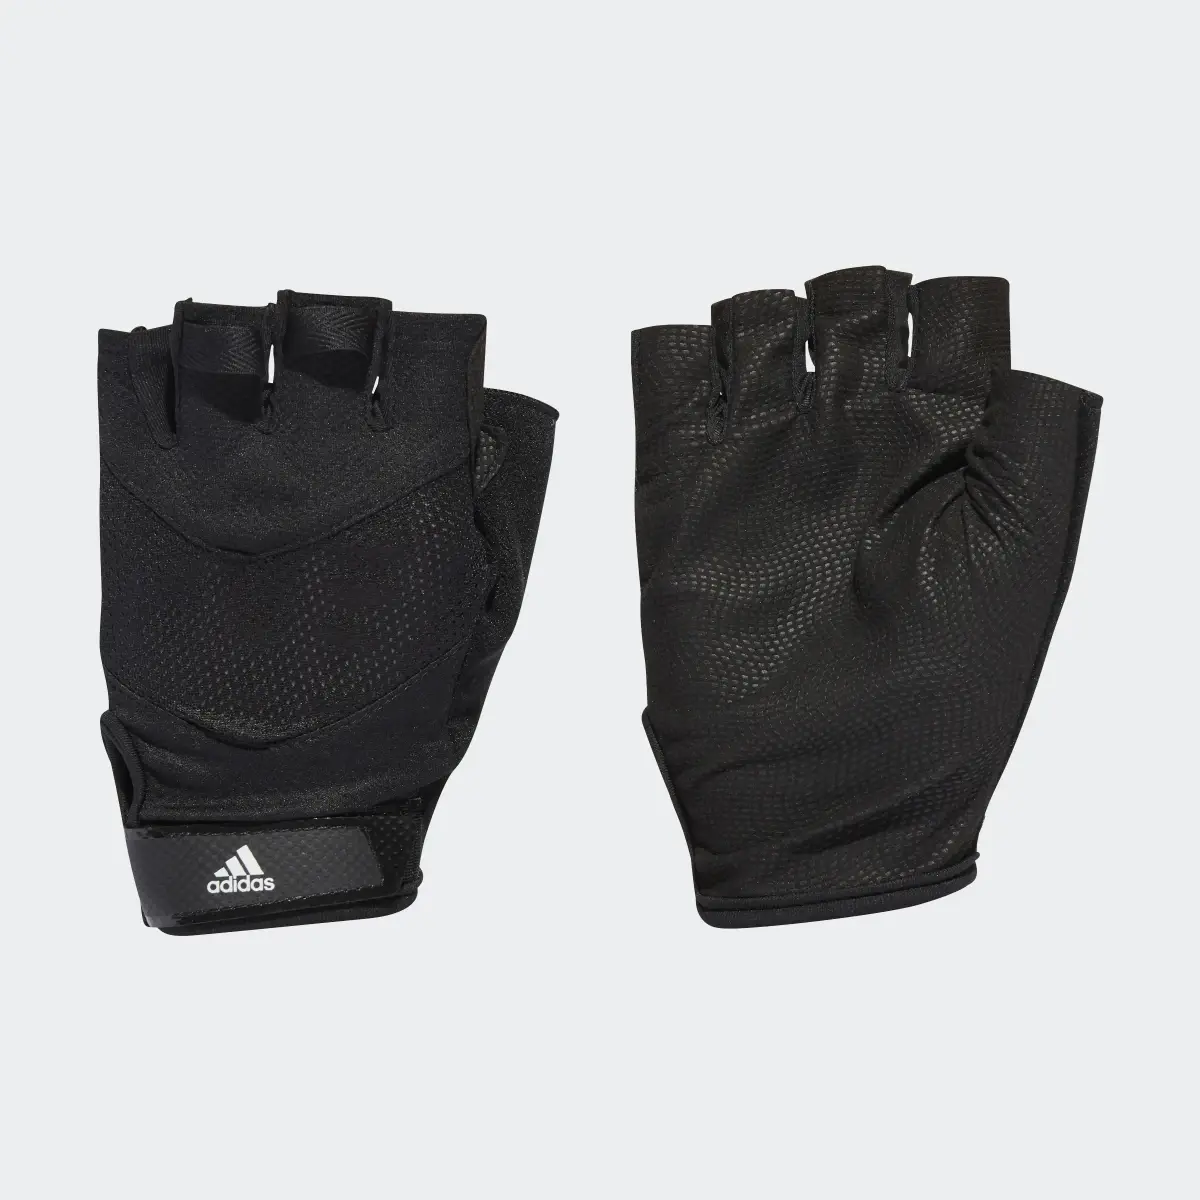 Adidas Training Gloves. 2